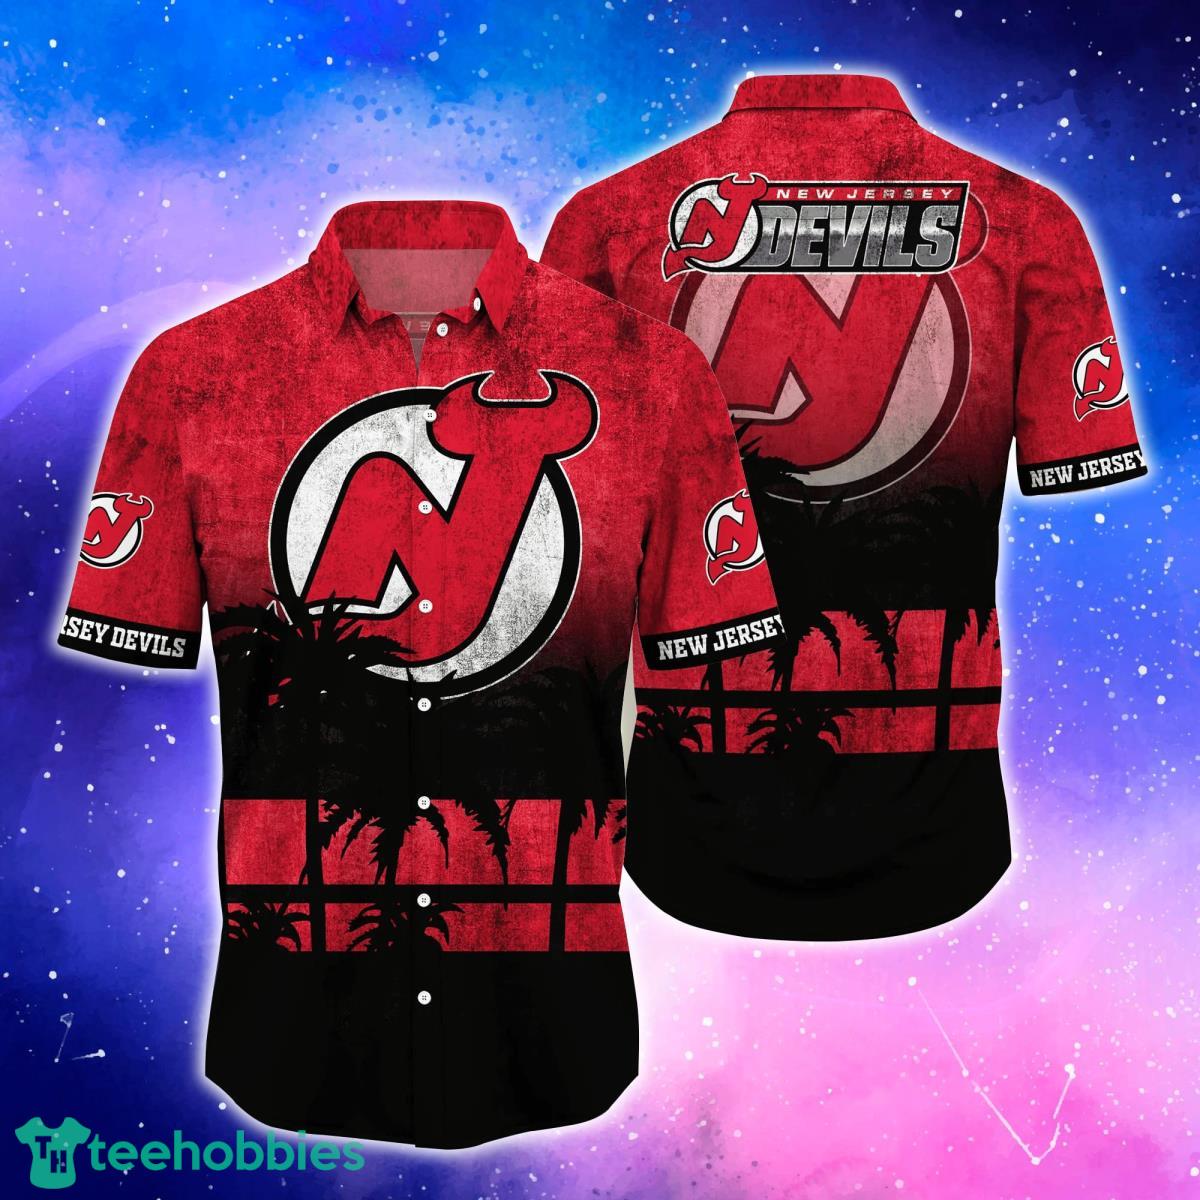 New Jersey Devils NHL Flower Hawaiian Shirt Best Gift For Fans